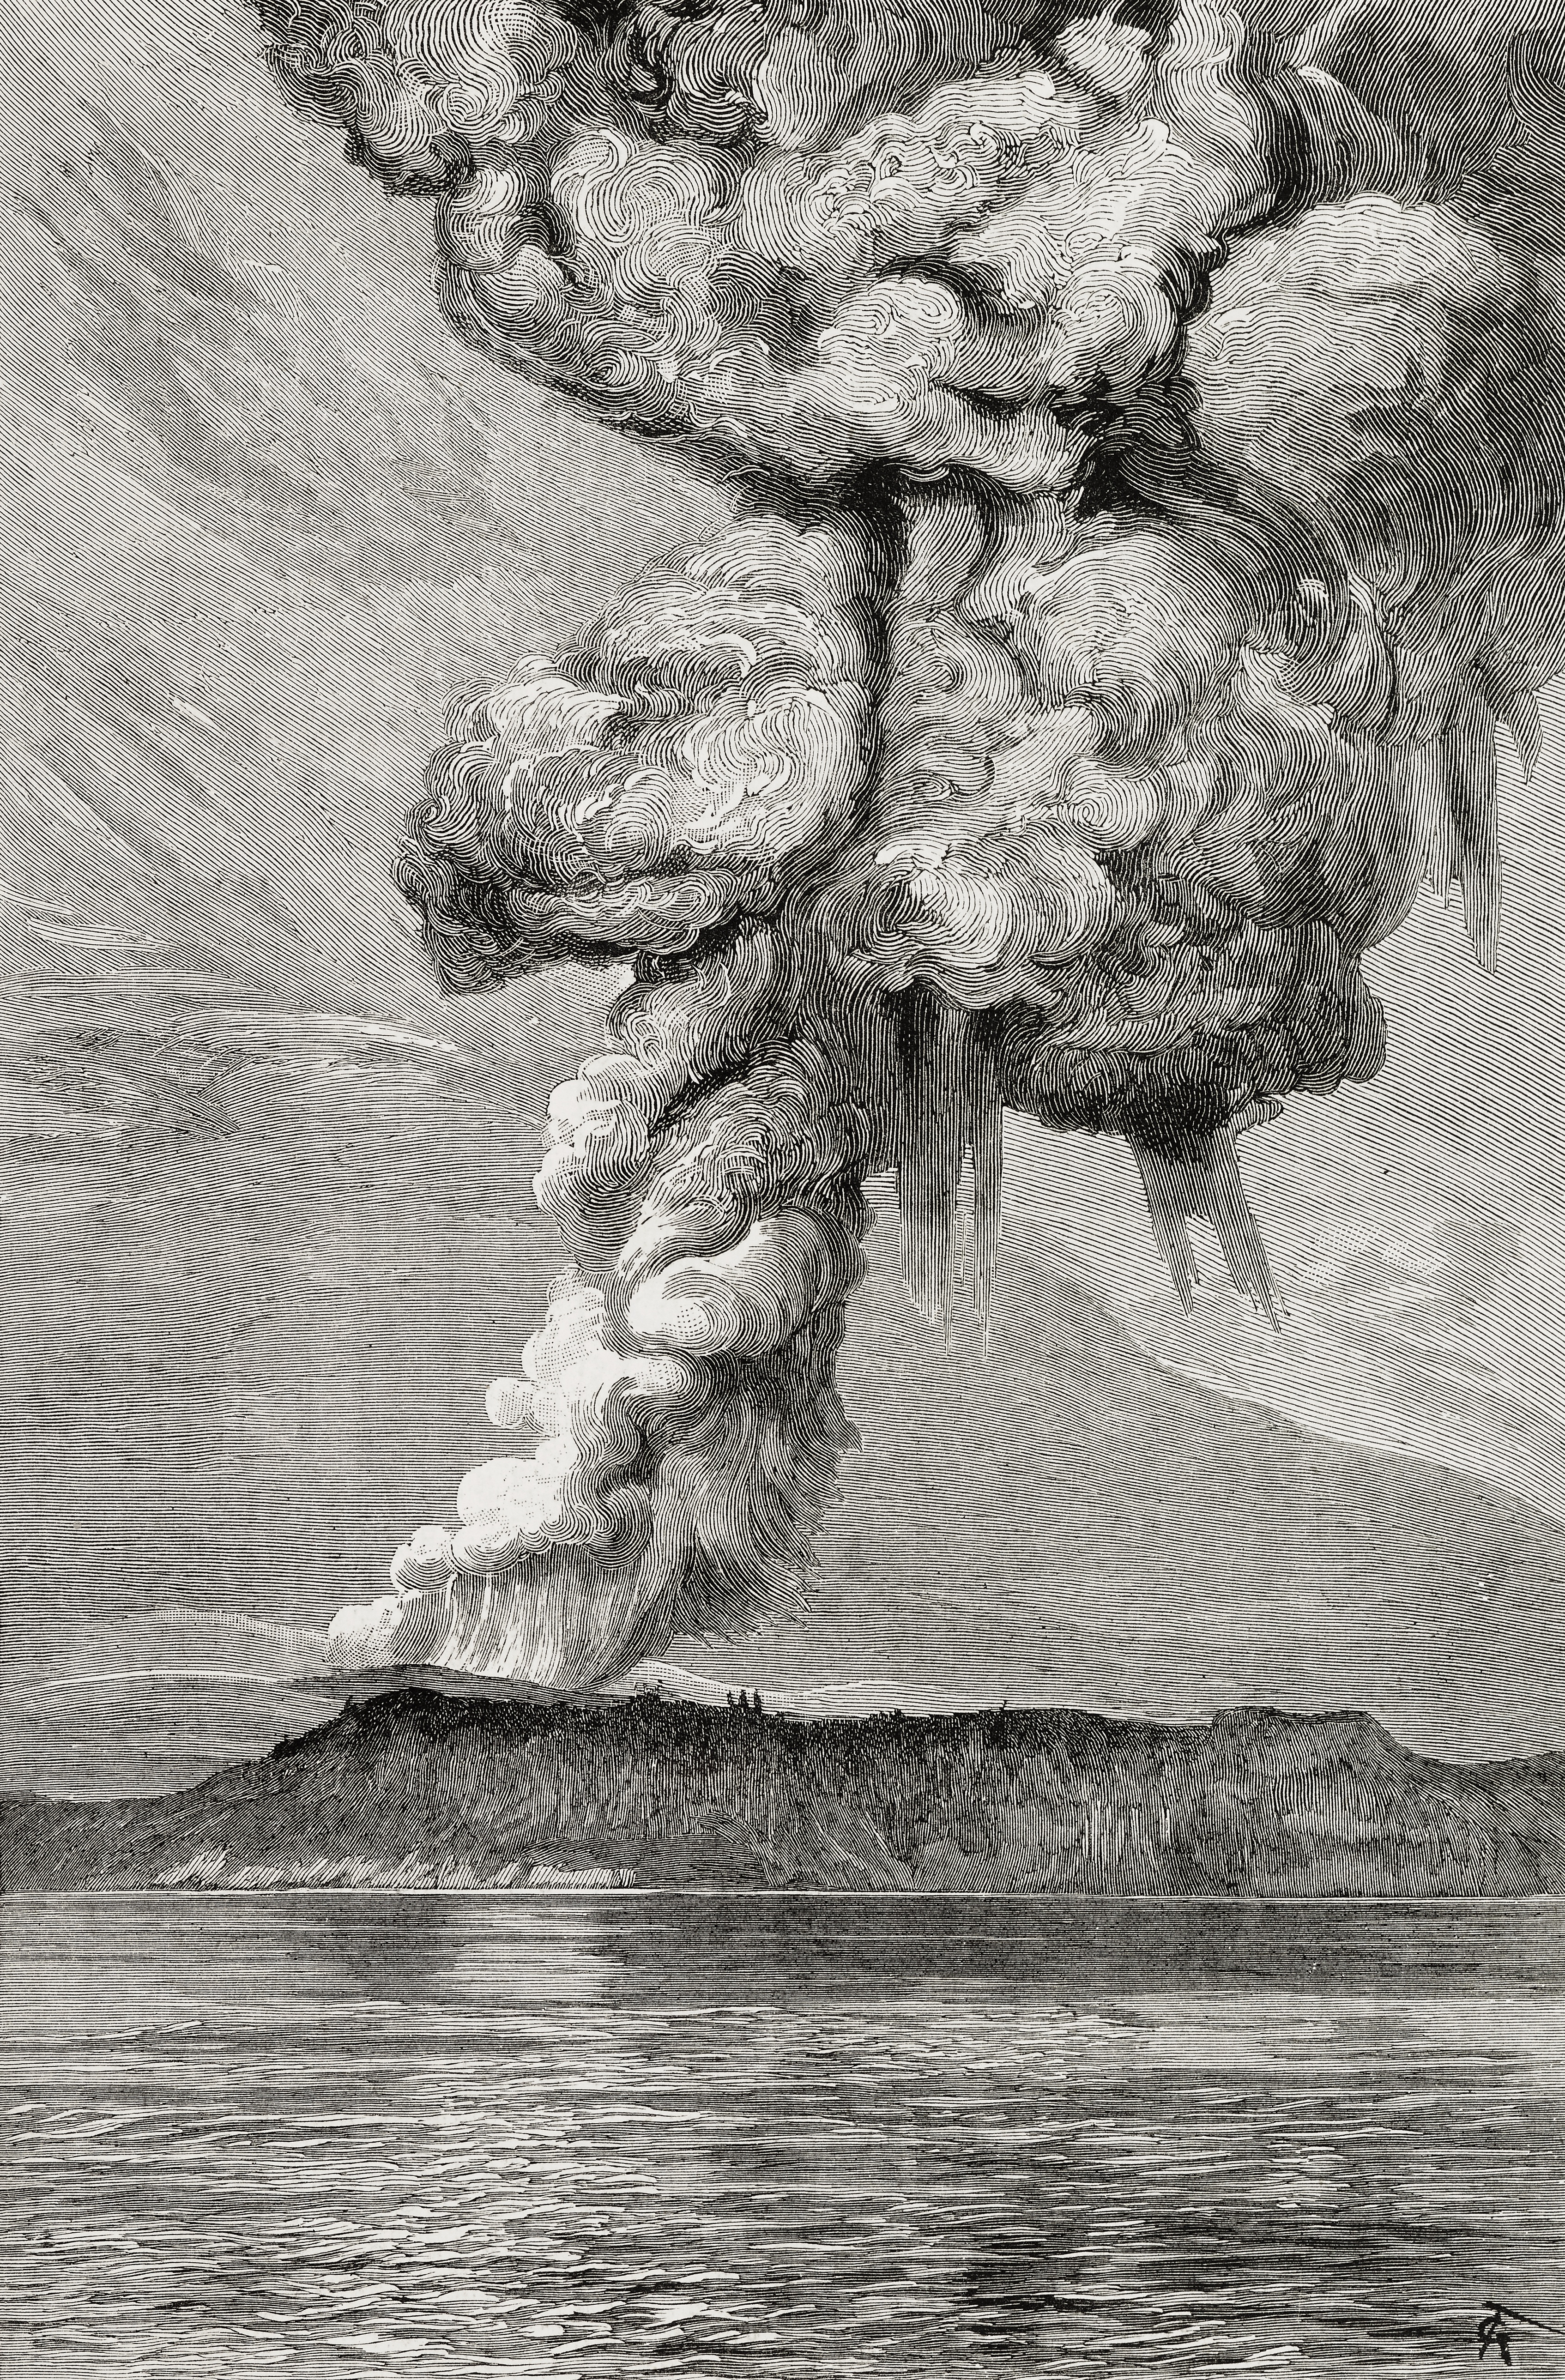 Volcanic eruption of Krakatau